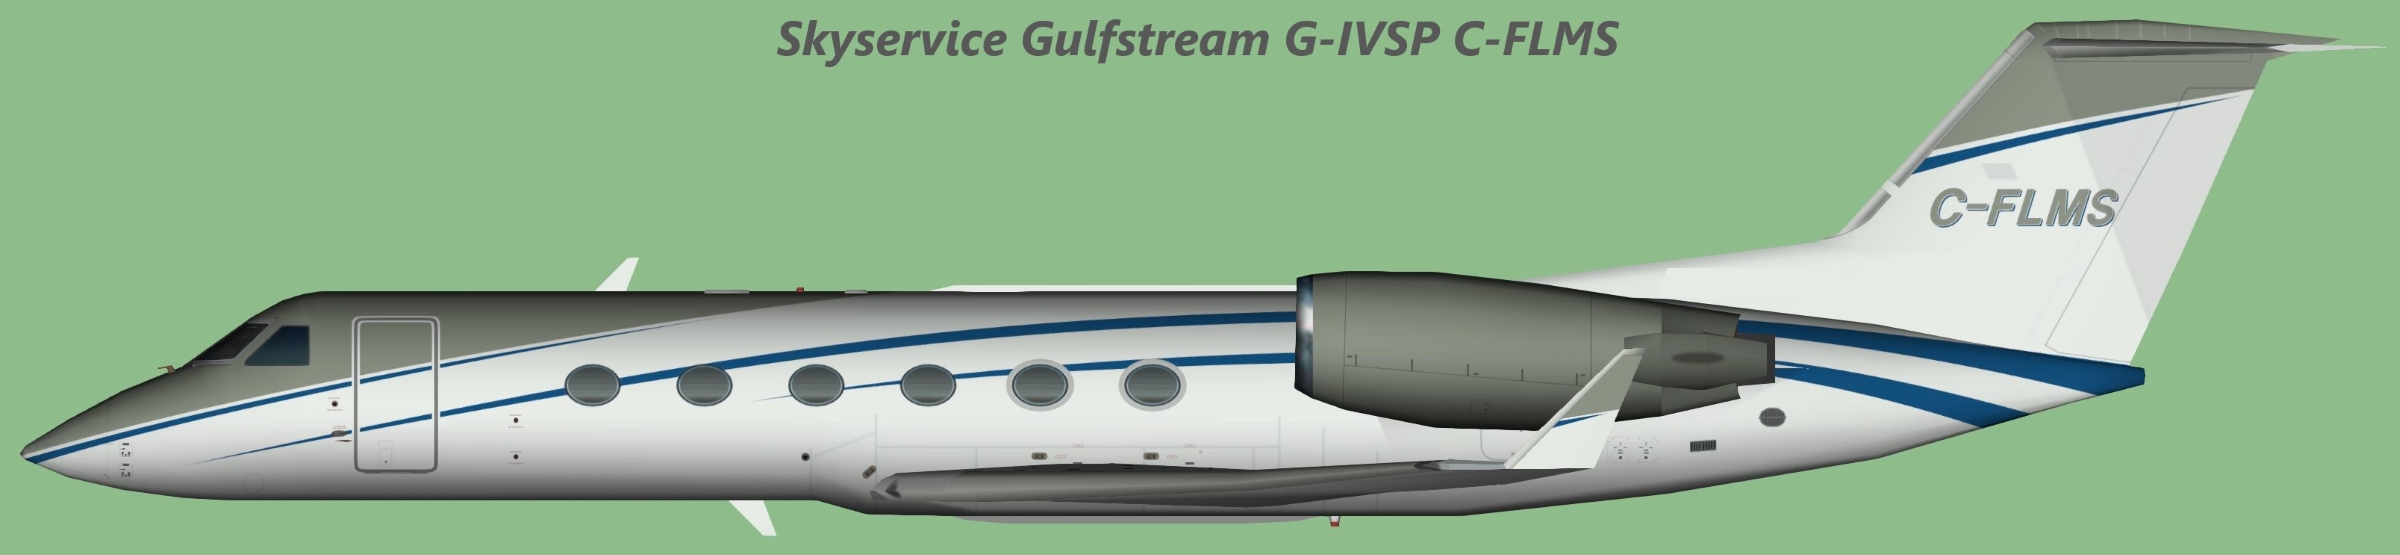 Skyservice Gulfstream G-IVSP